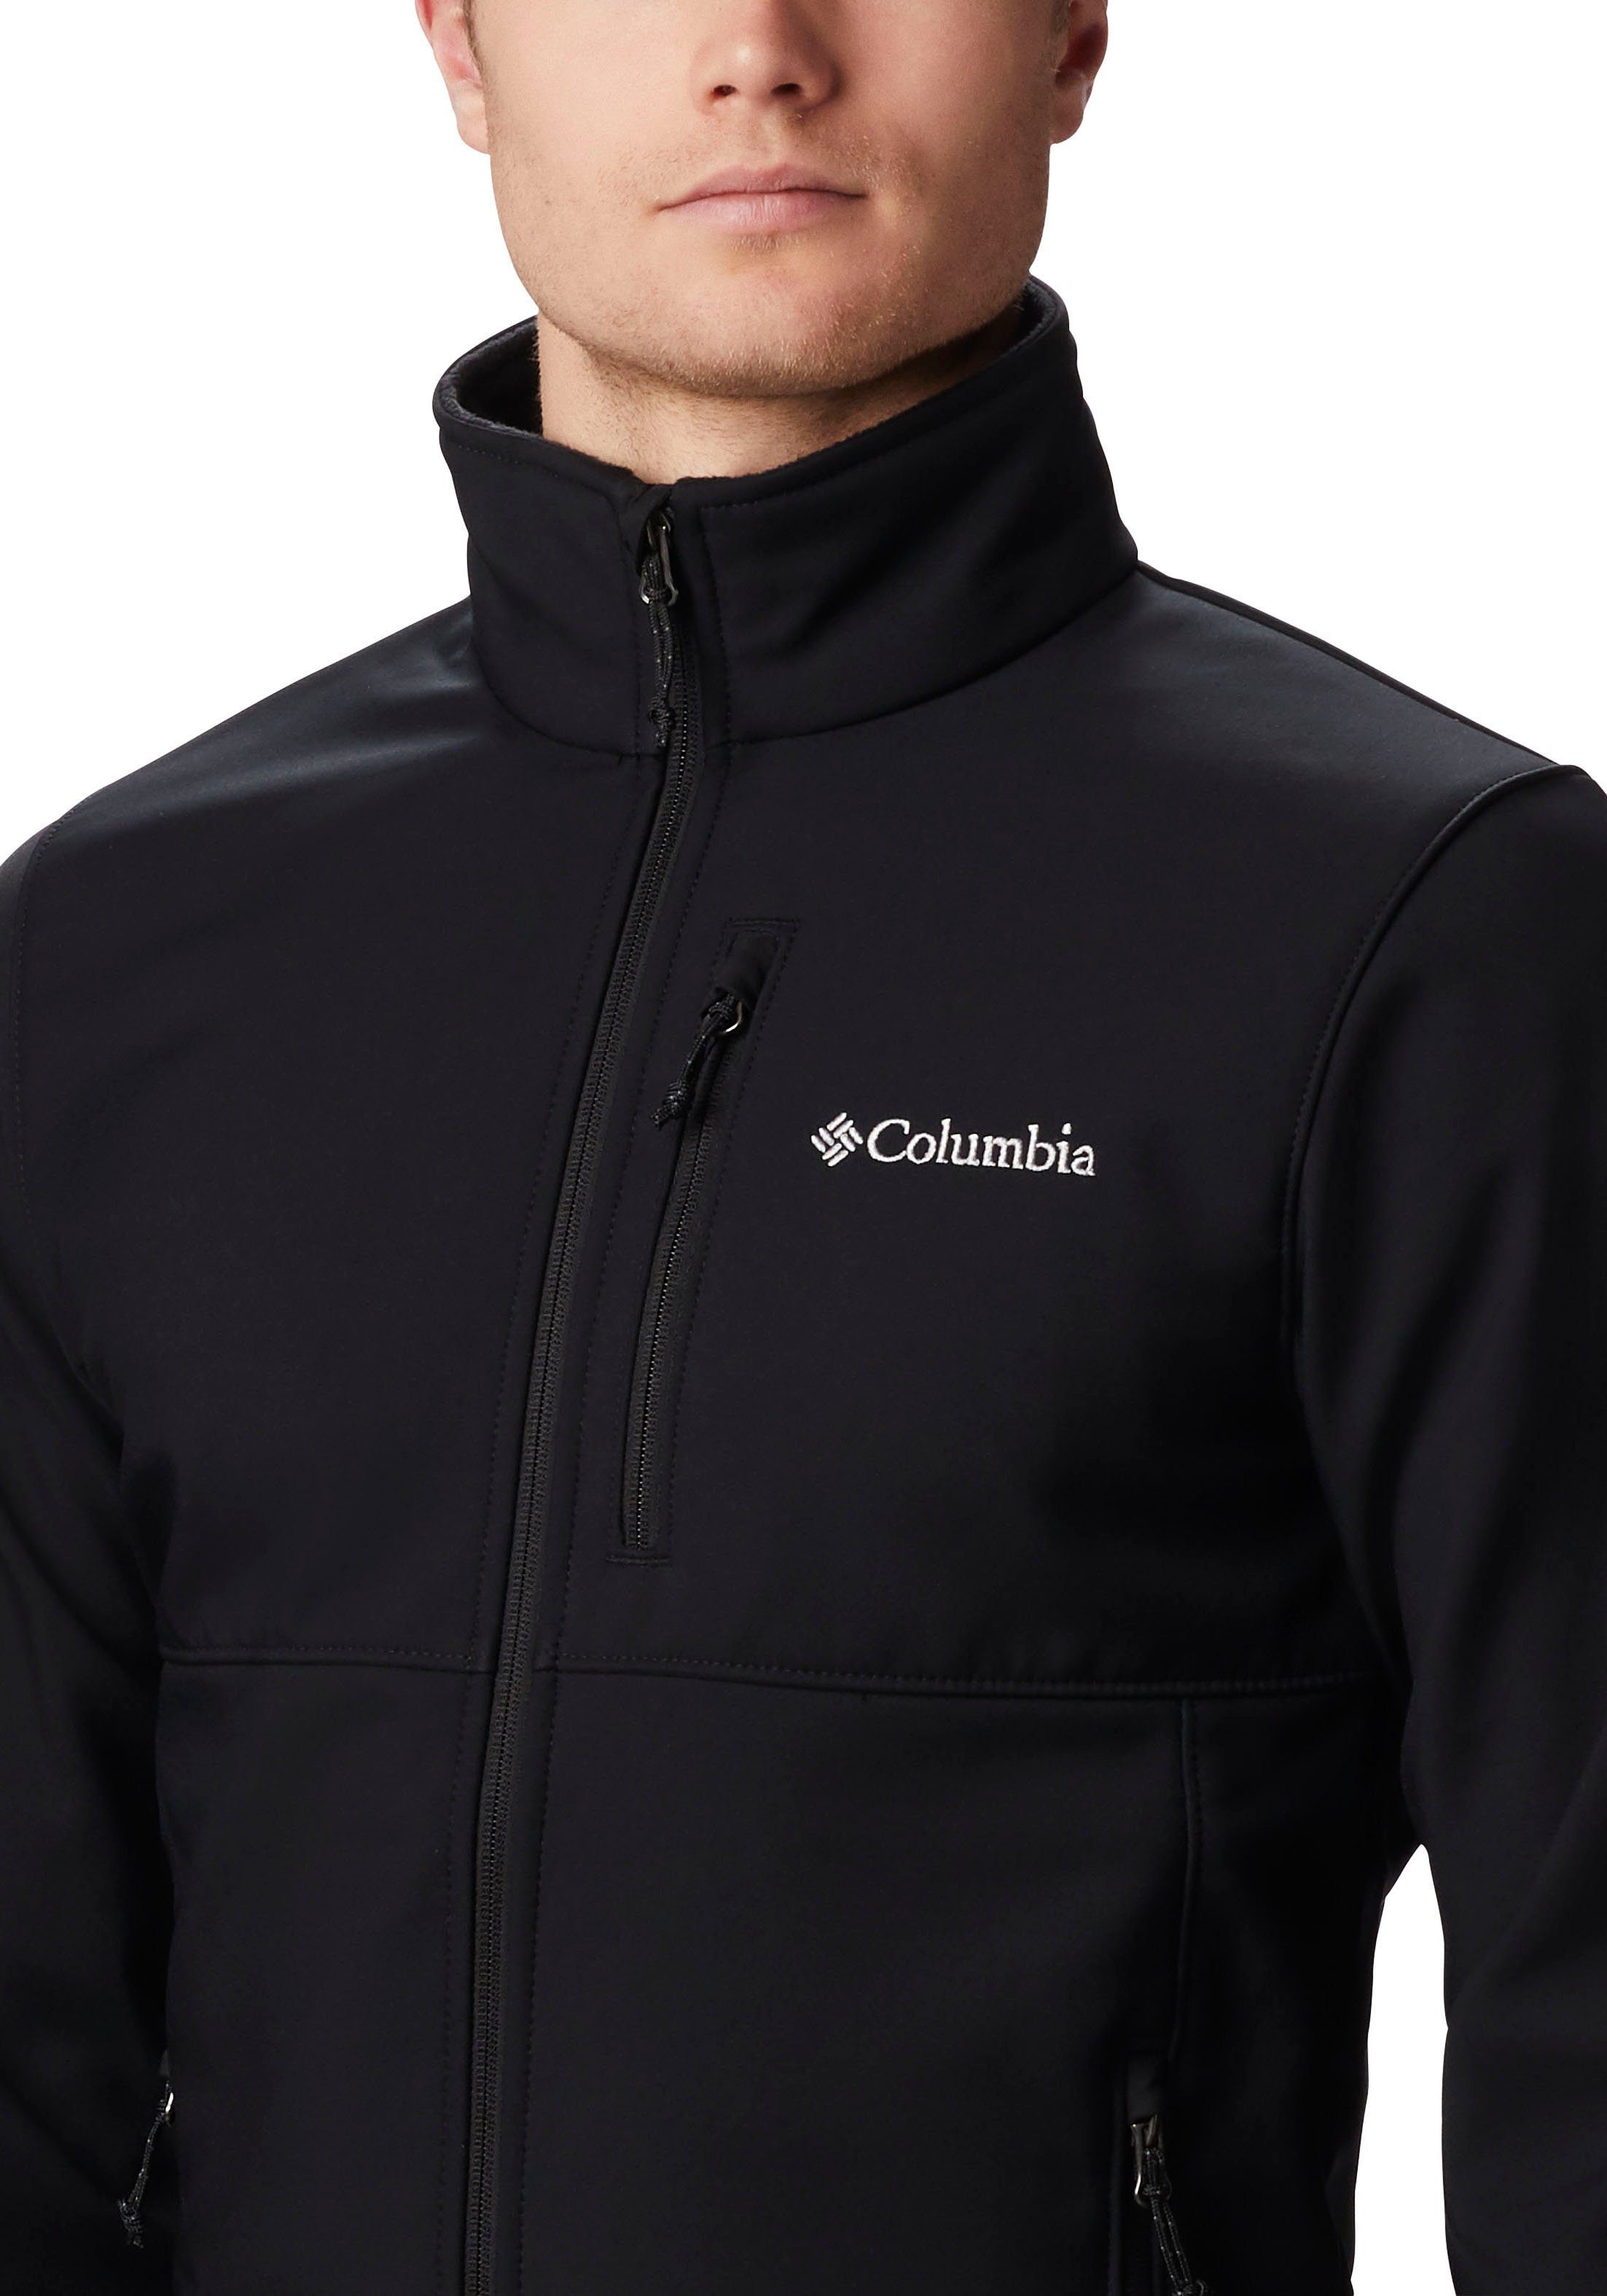 Softshelljacke Columbia Ascender black Jacket Softshell